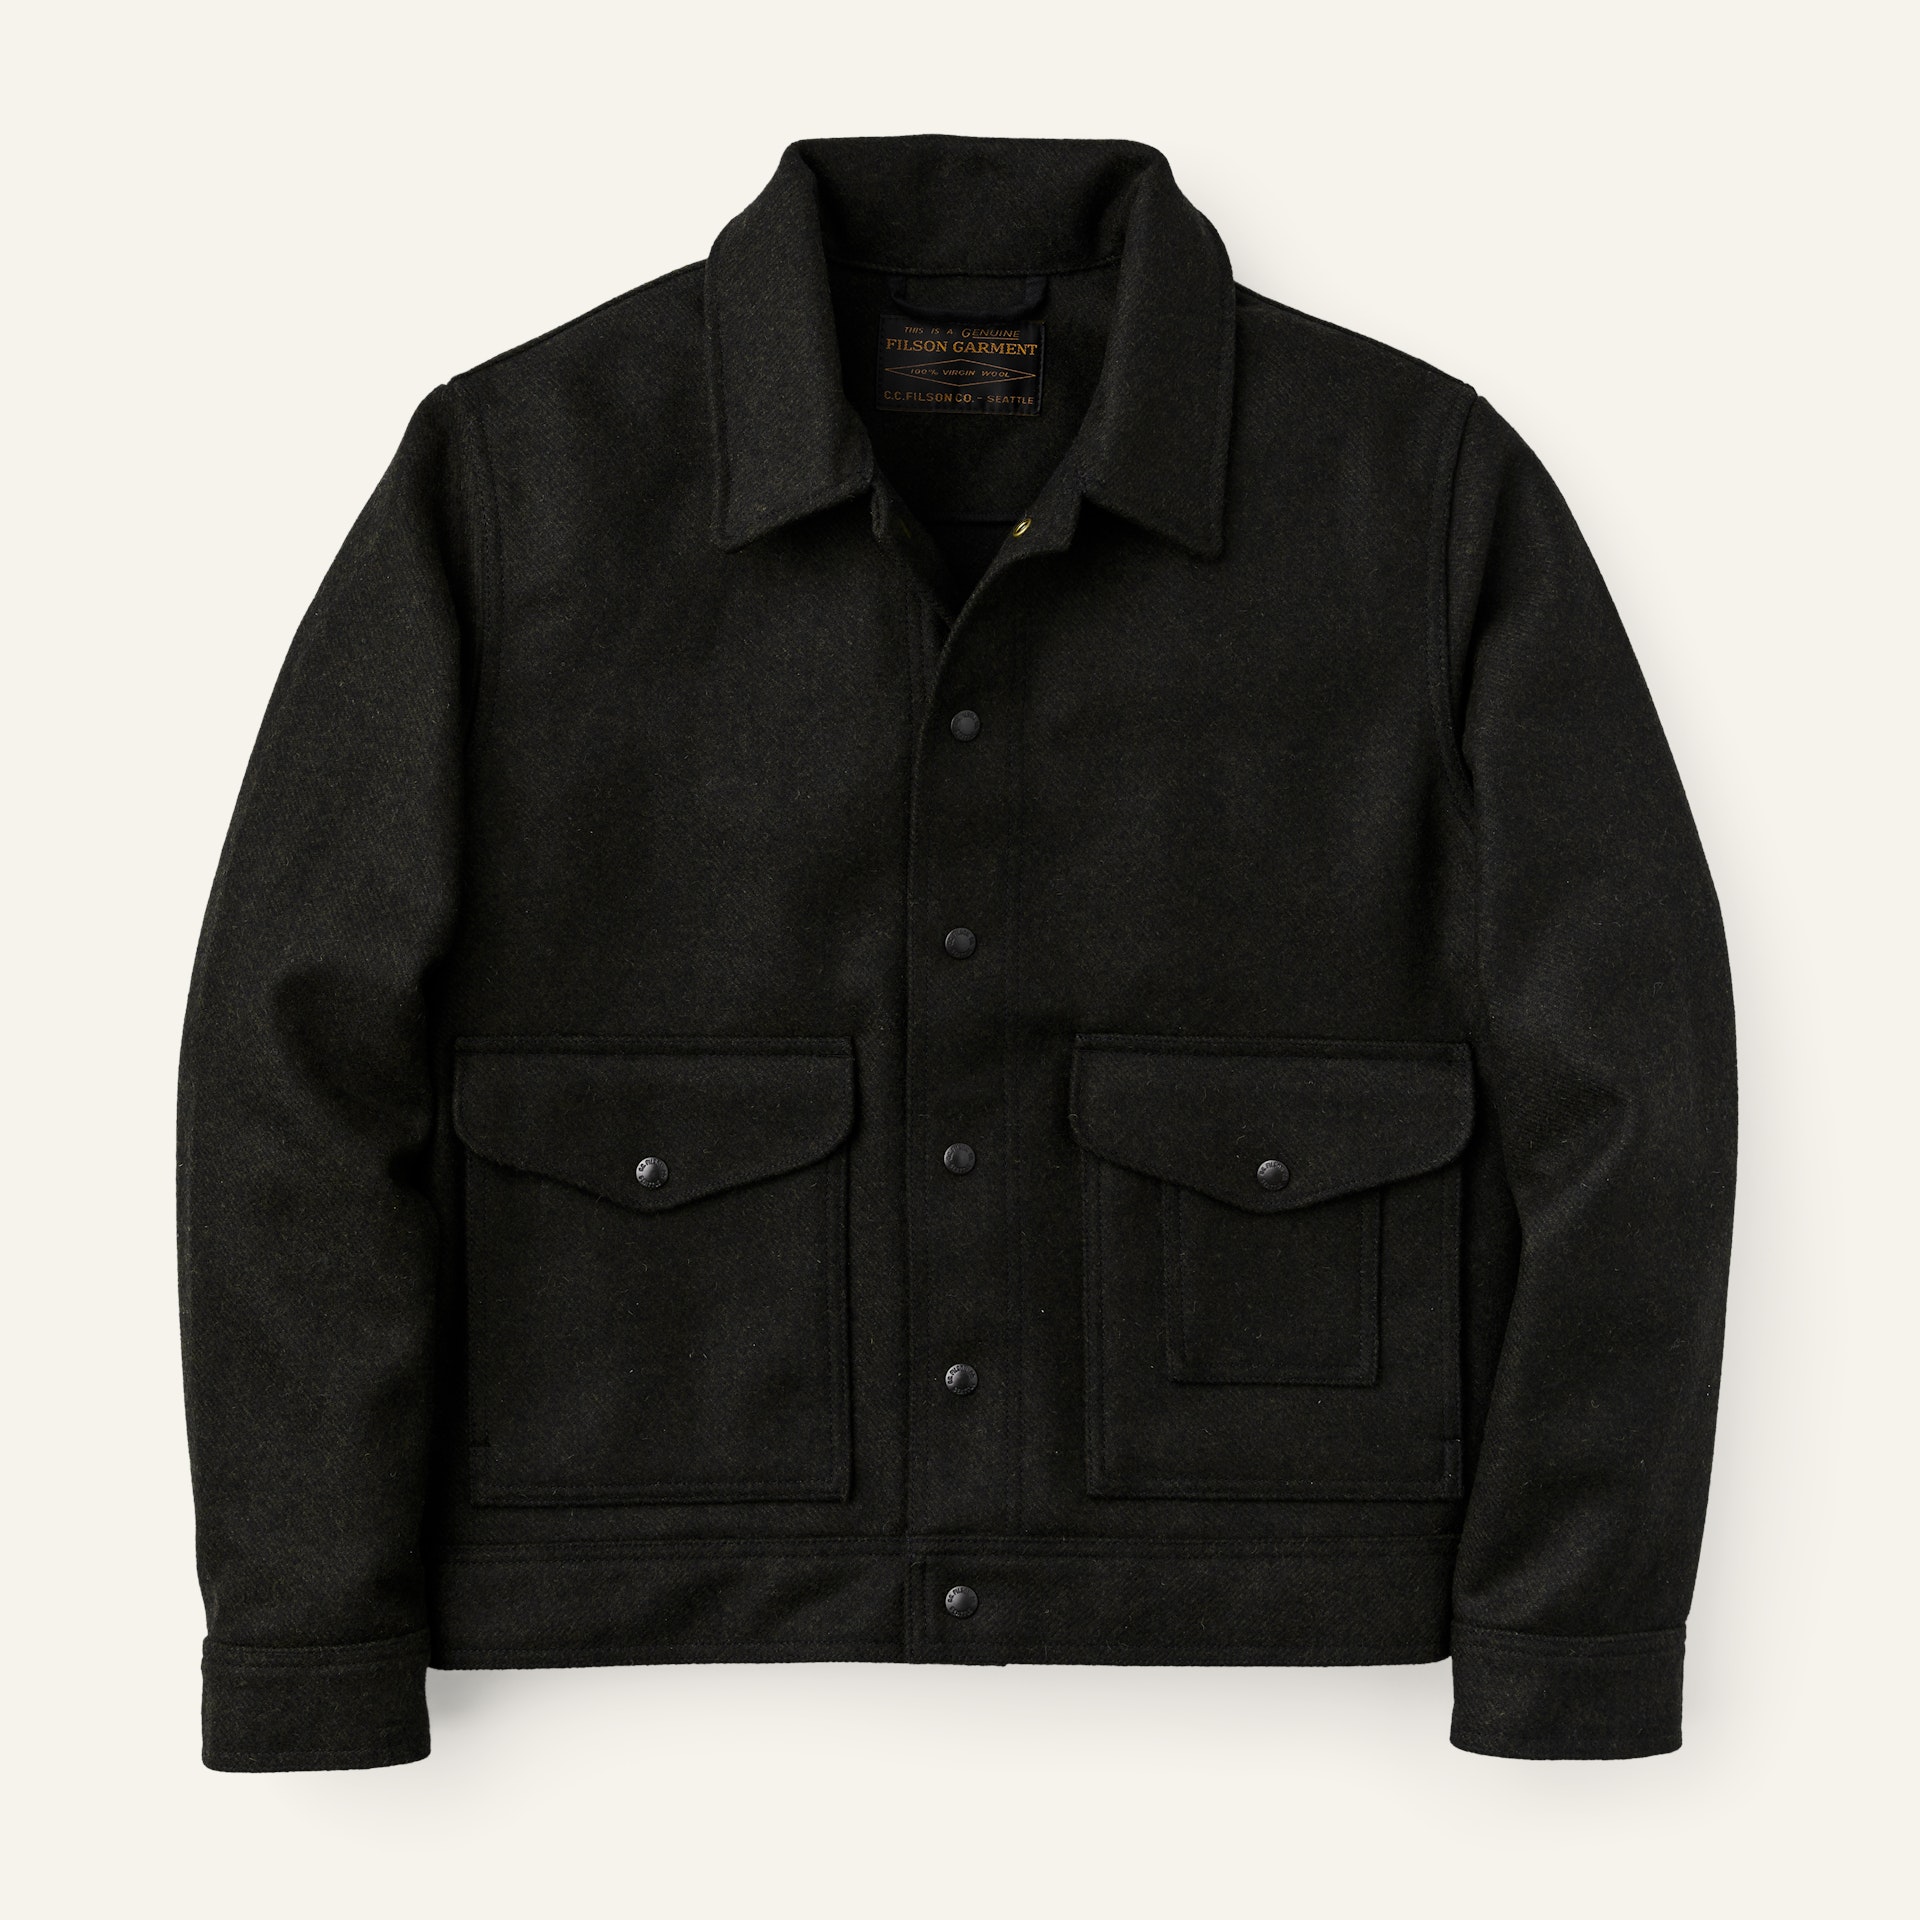 1950s Men’s Workwear & Casual Clothes Mackinaw Wool Work Jacket $455.00 AT vintagedancer.com